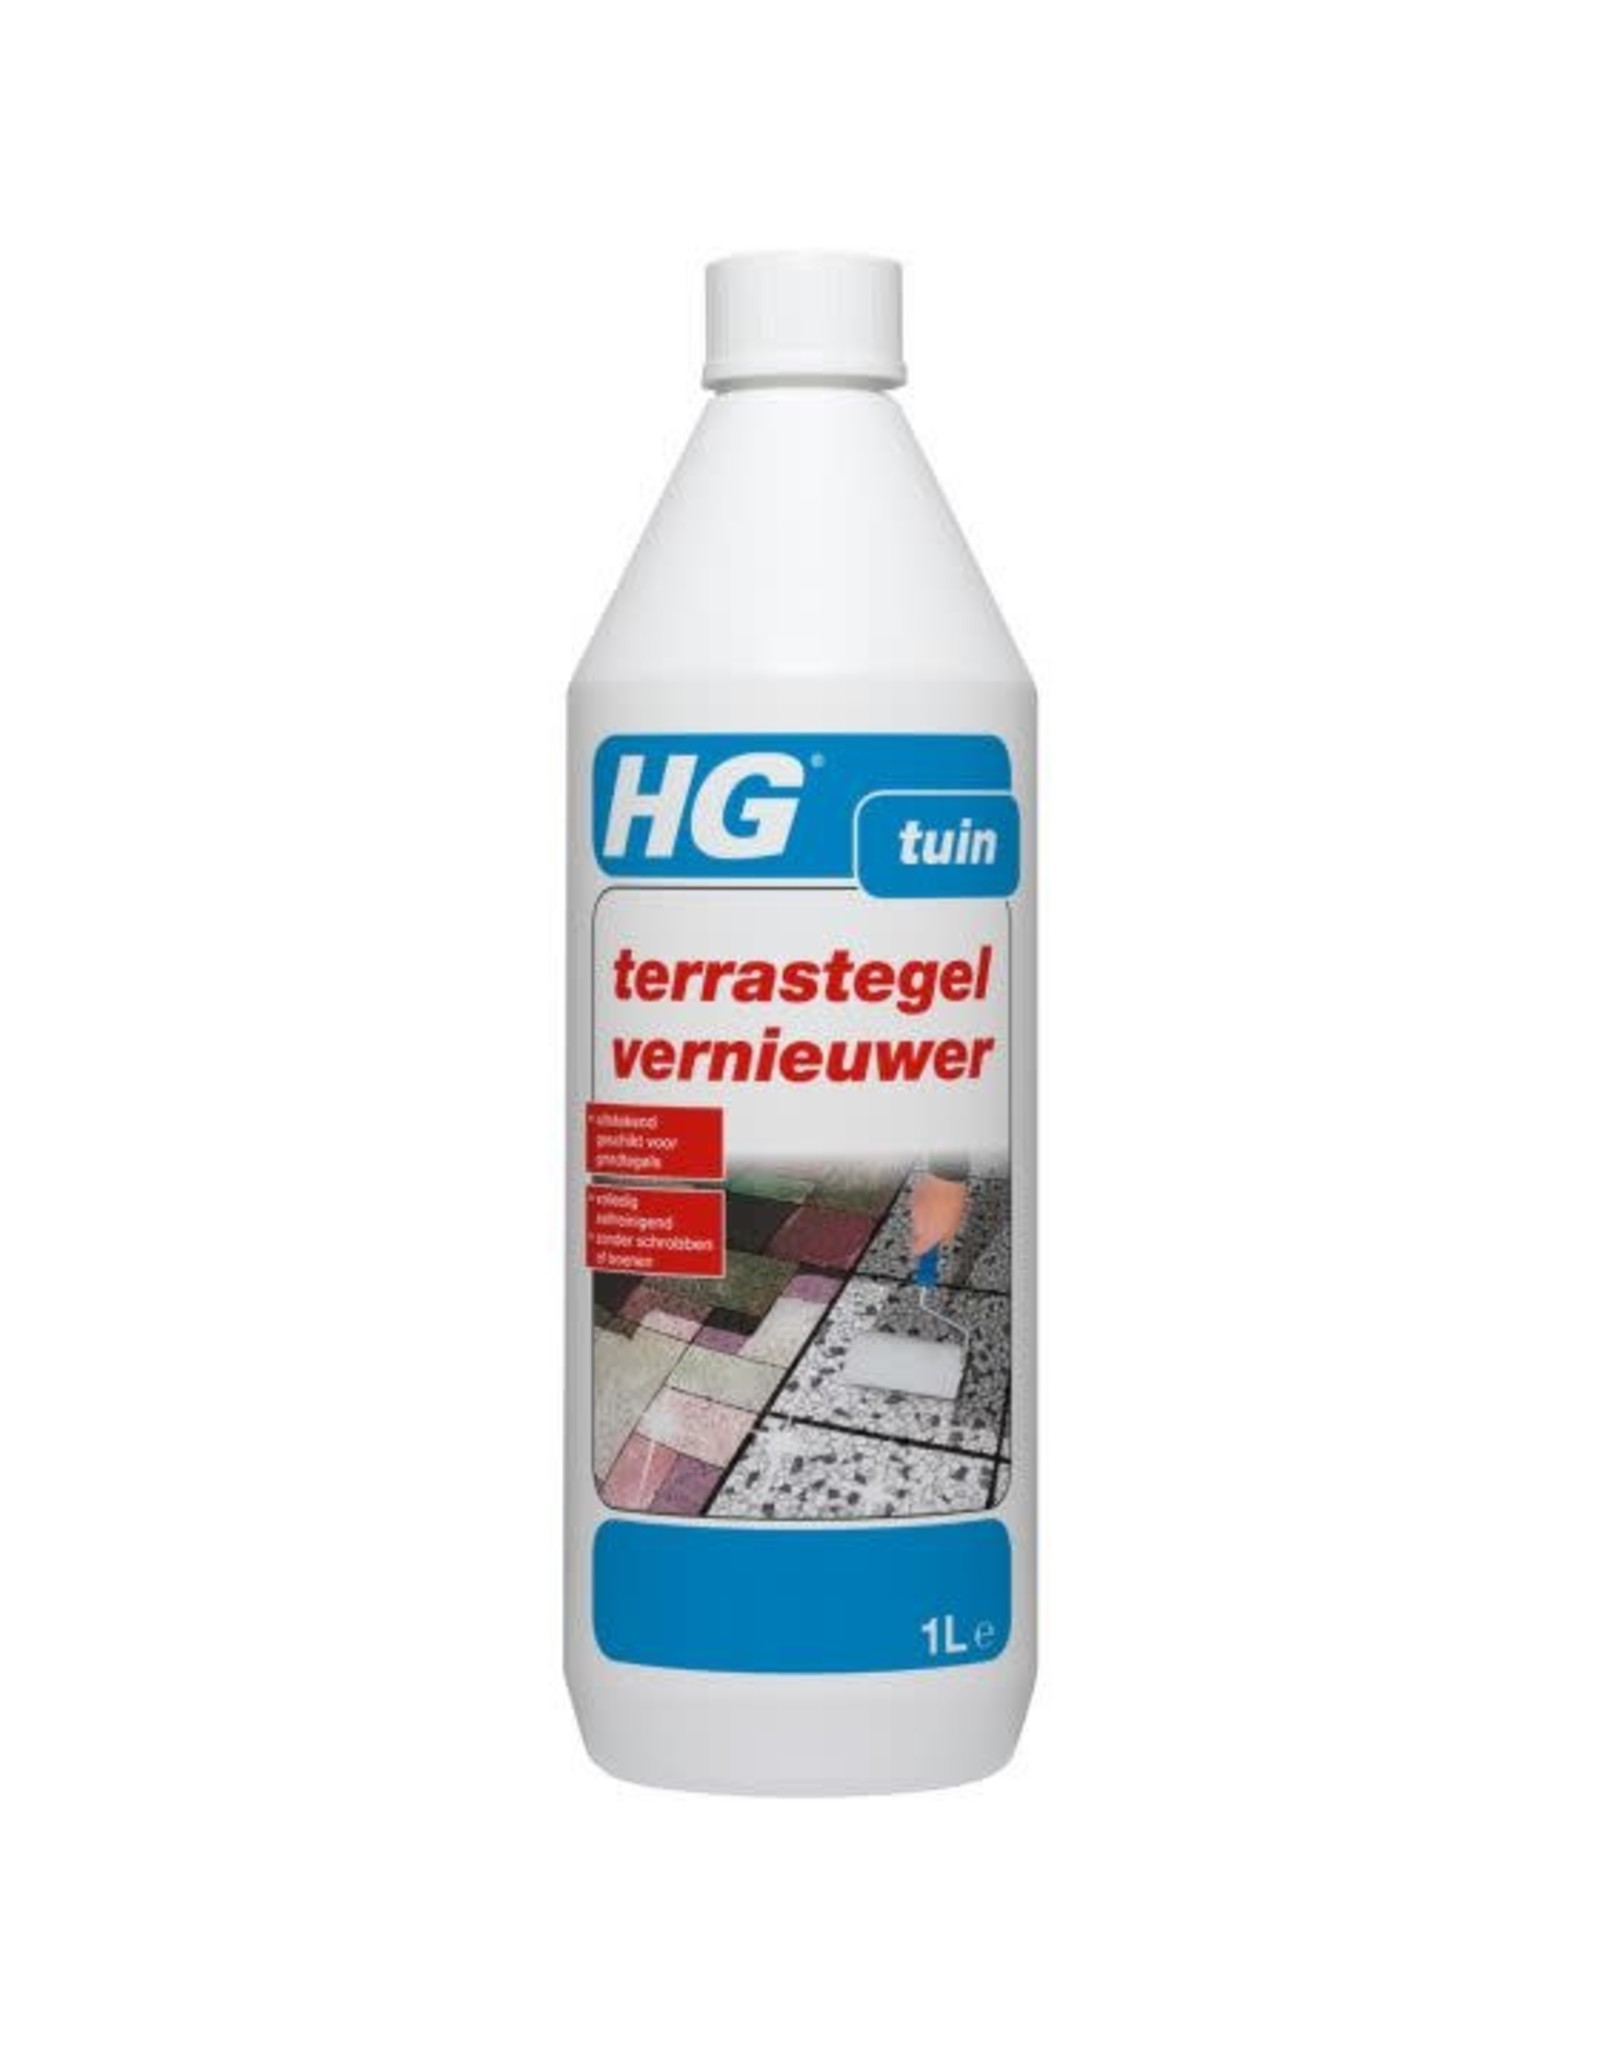 HG Hg Terrastegel Vernieuwer - Schoonmaakmiddelen - 1 l